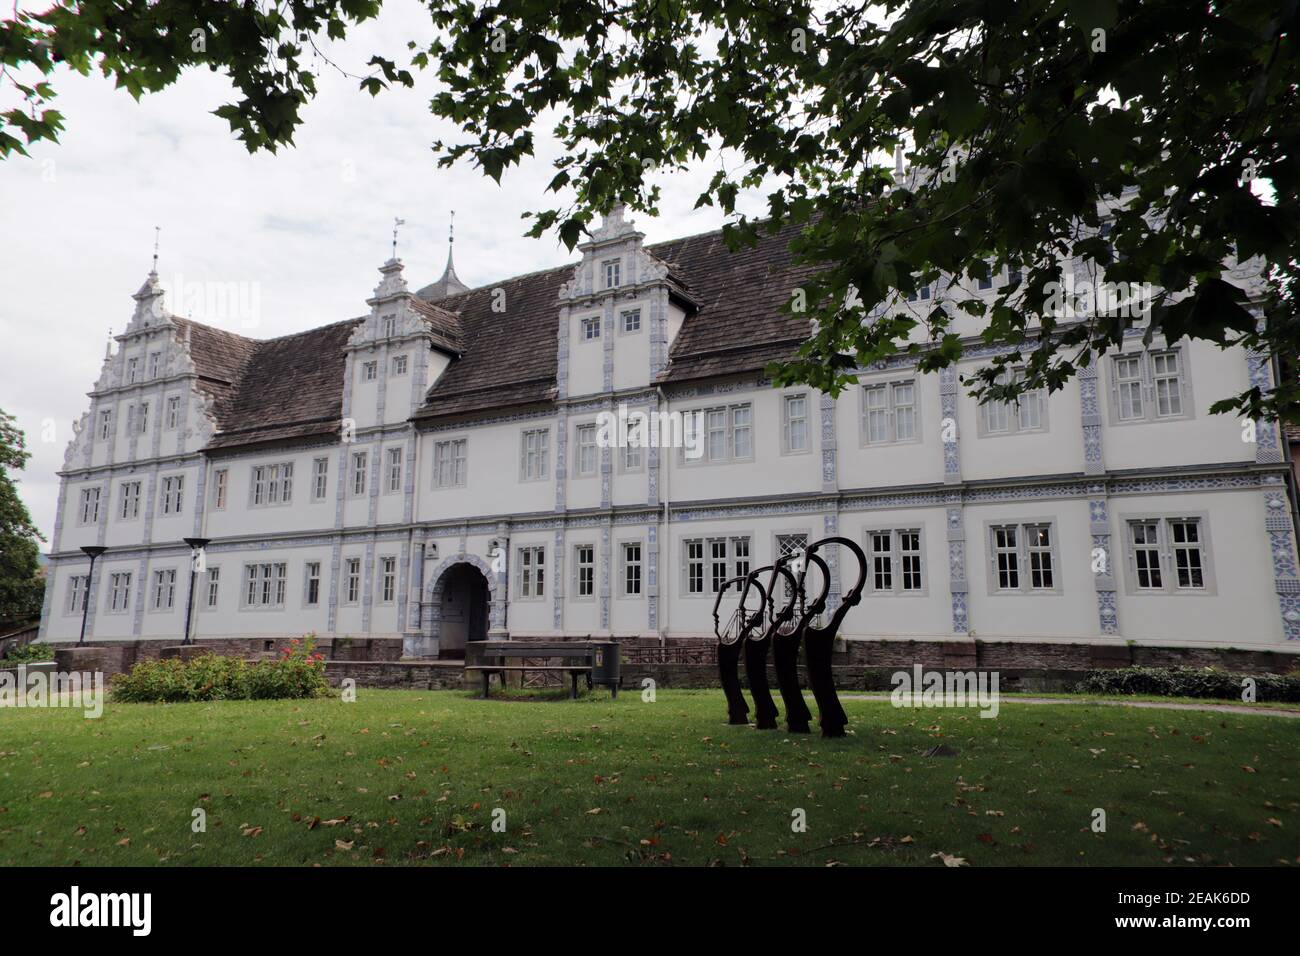 Schloss Bevern, beddeutendes Baudenkmmal der Weserrenaissance Foto Stock